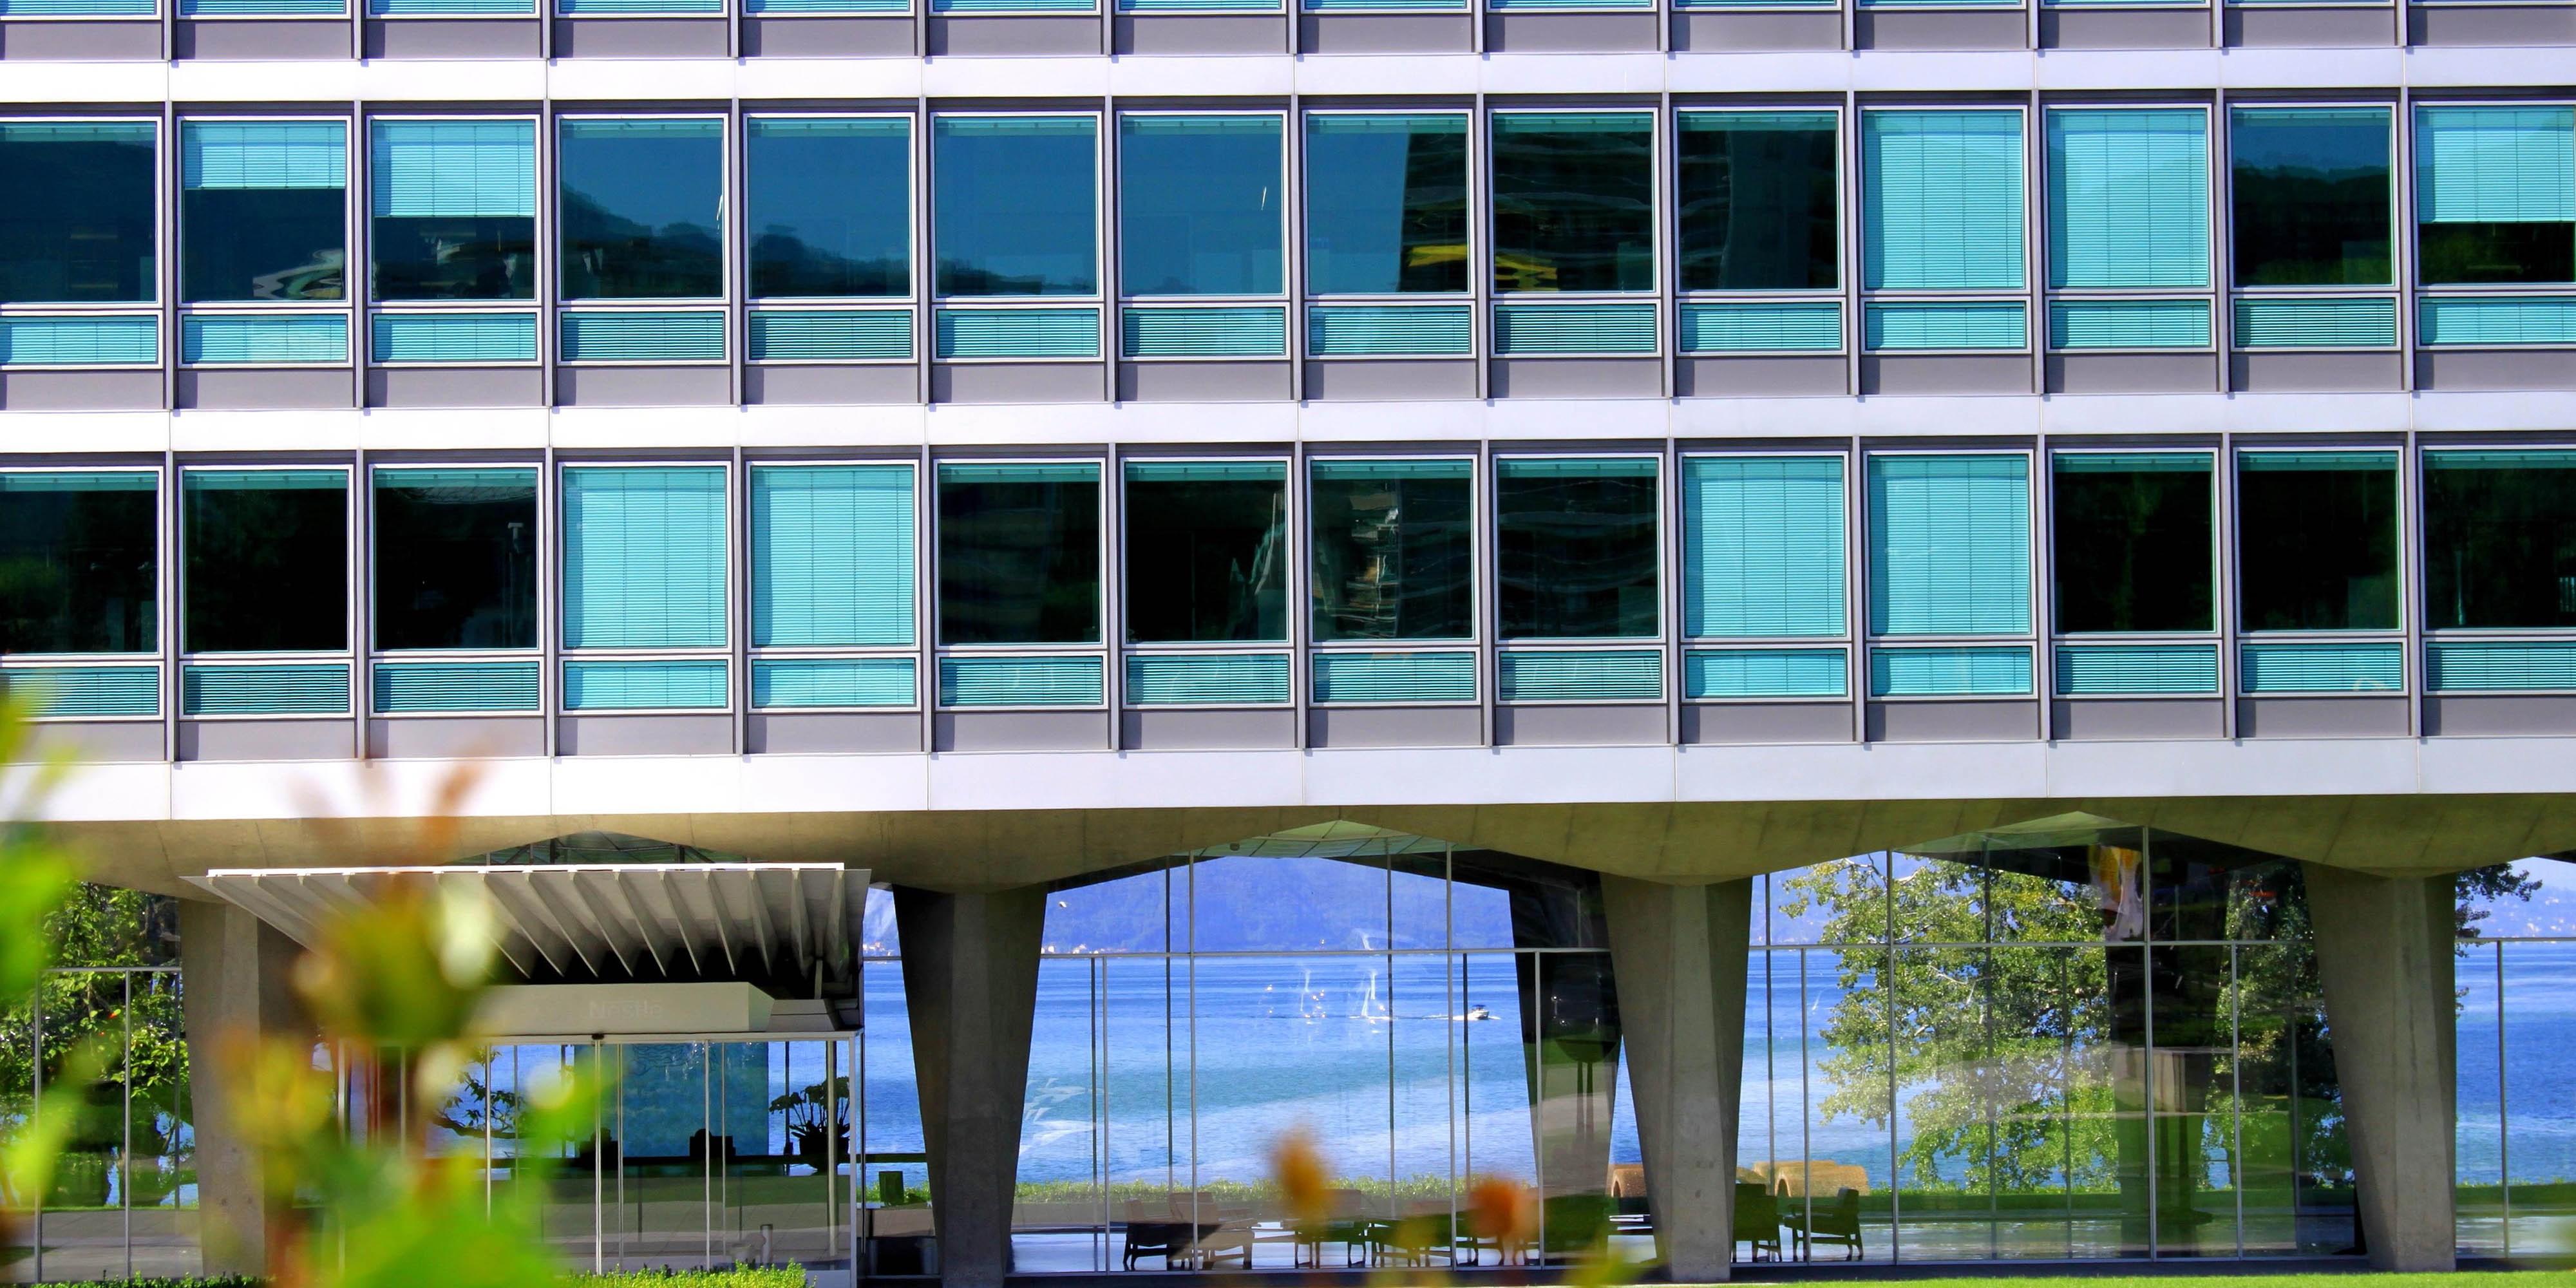 Nestlé HQ Vevey, Switzerland. Photo: Wikimedia Commons